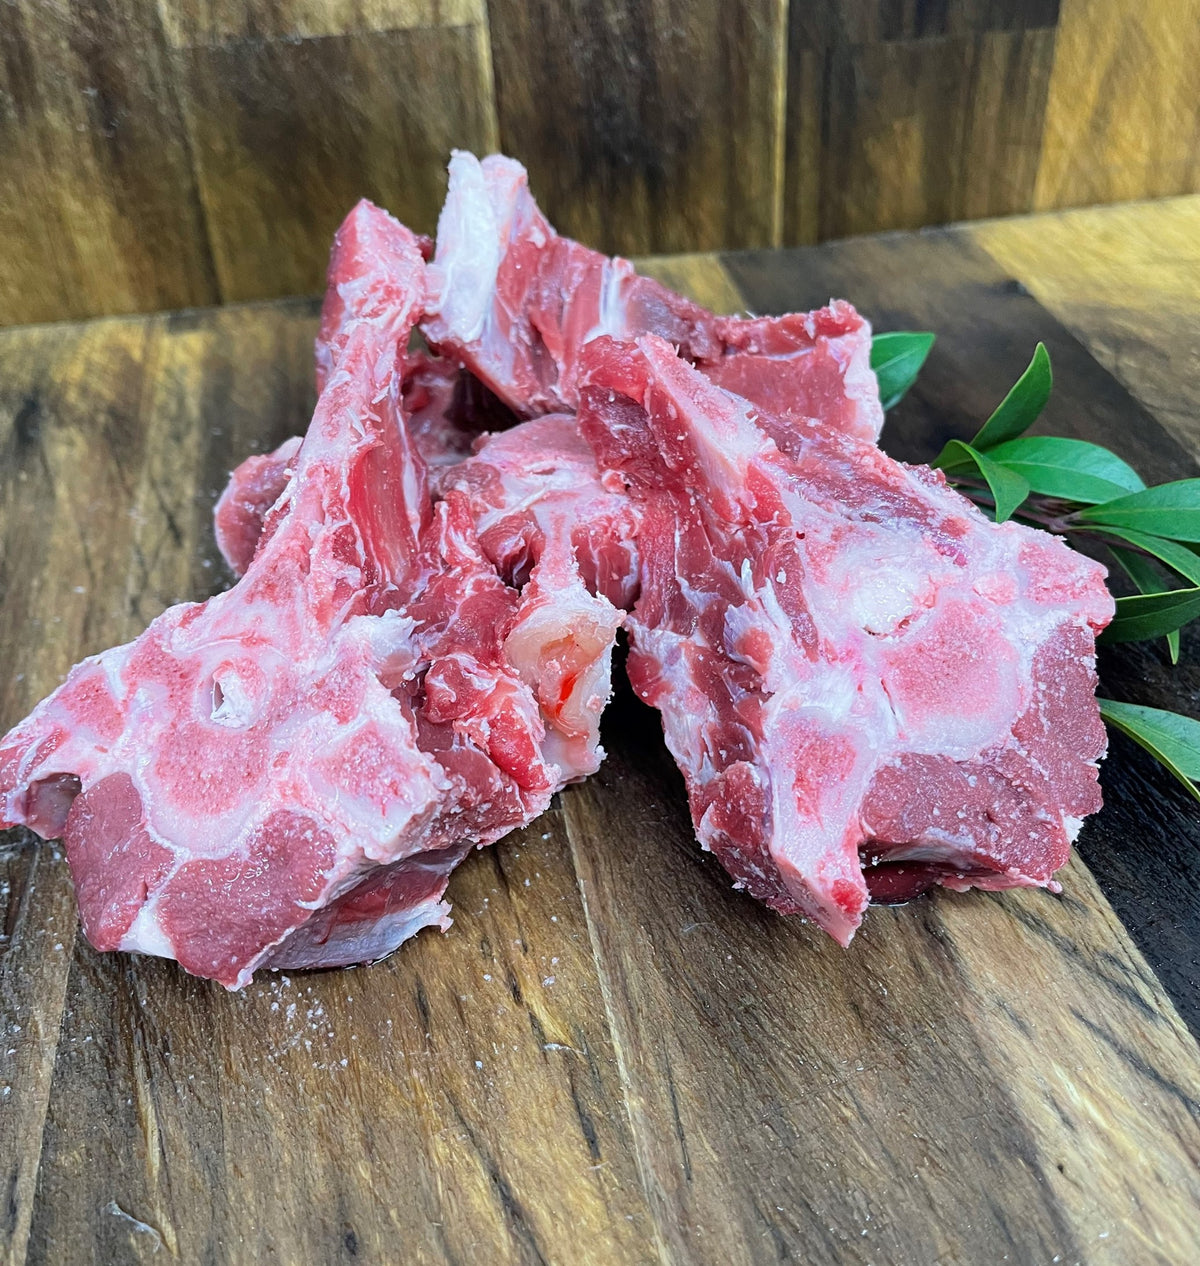 Raw meaty goat bones. Hypoallergenice natural free ranged goat.